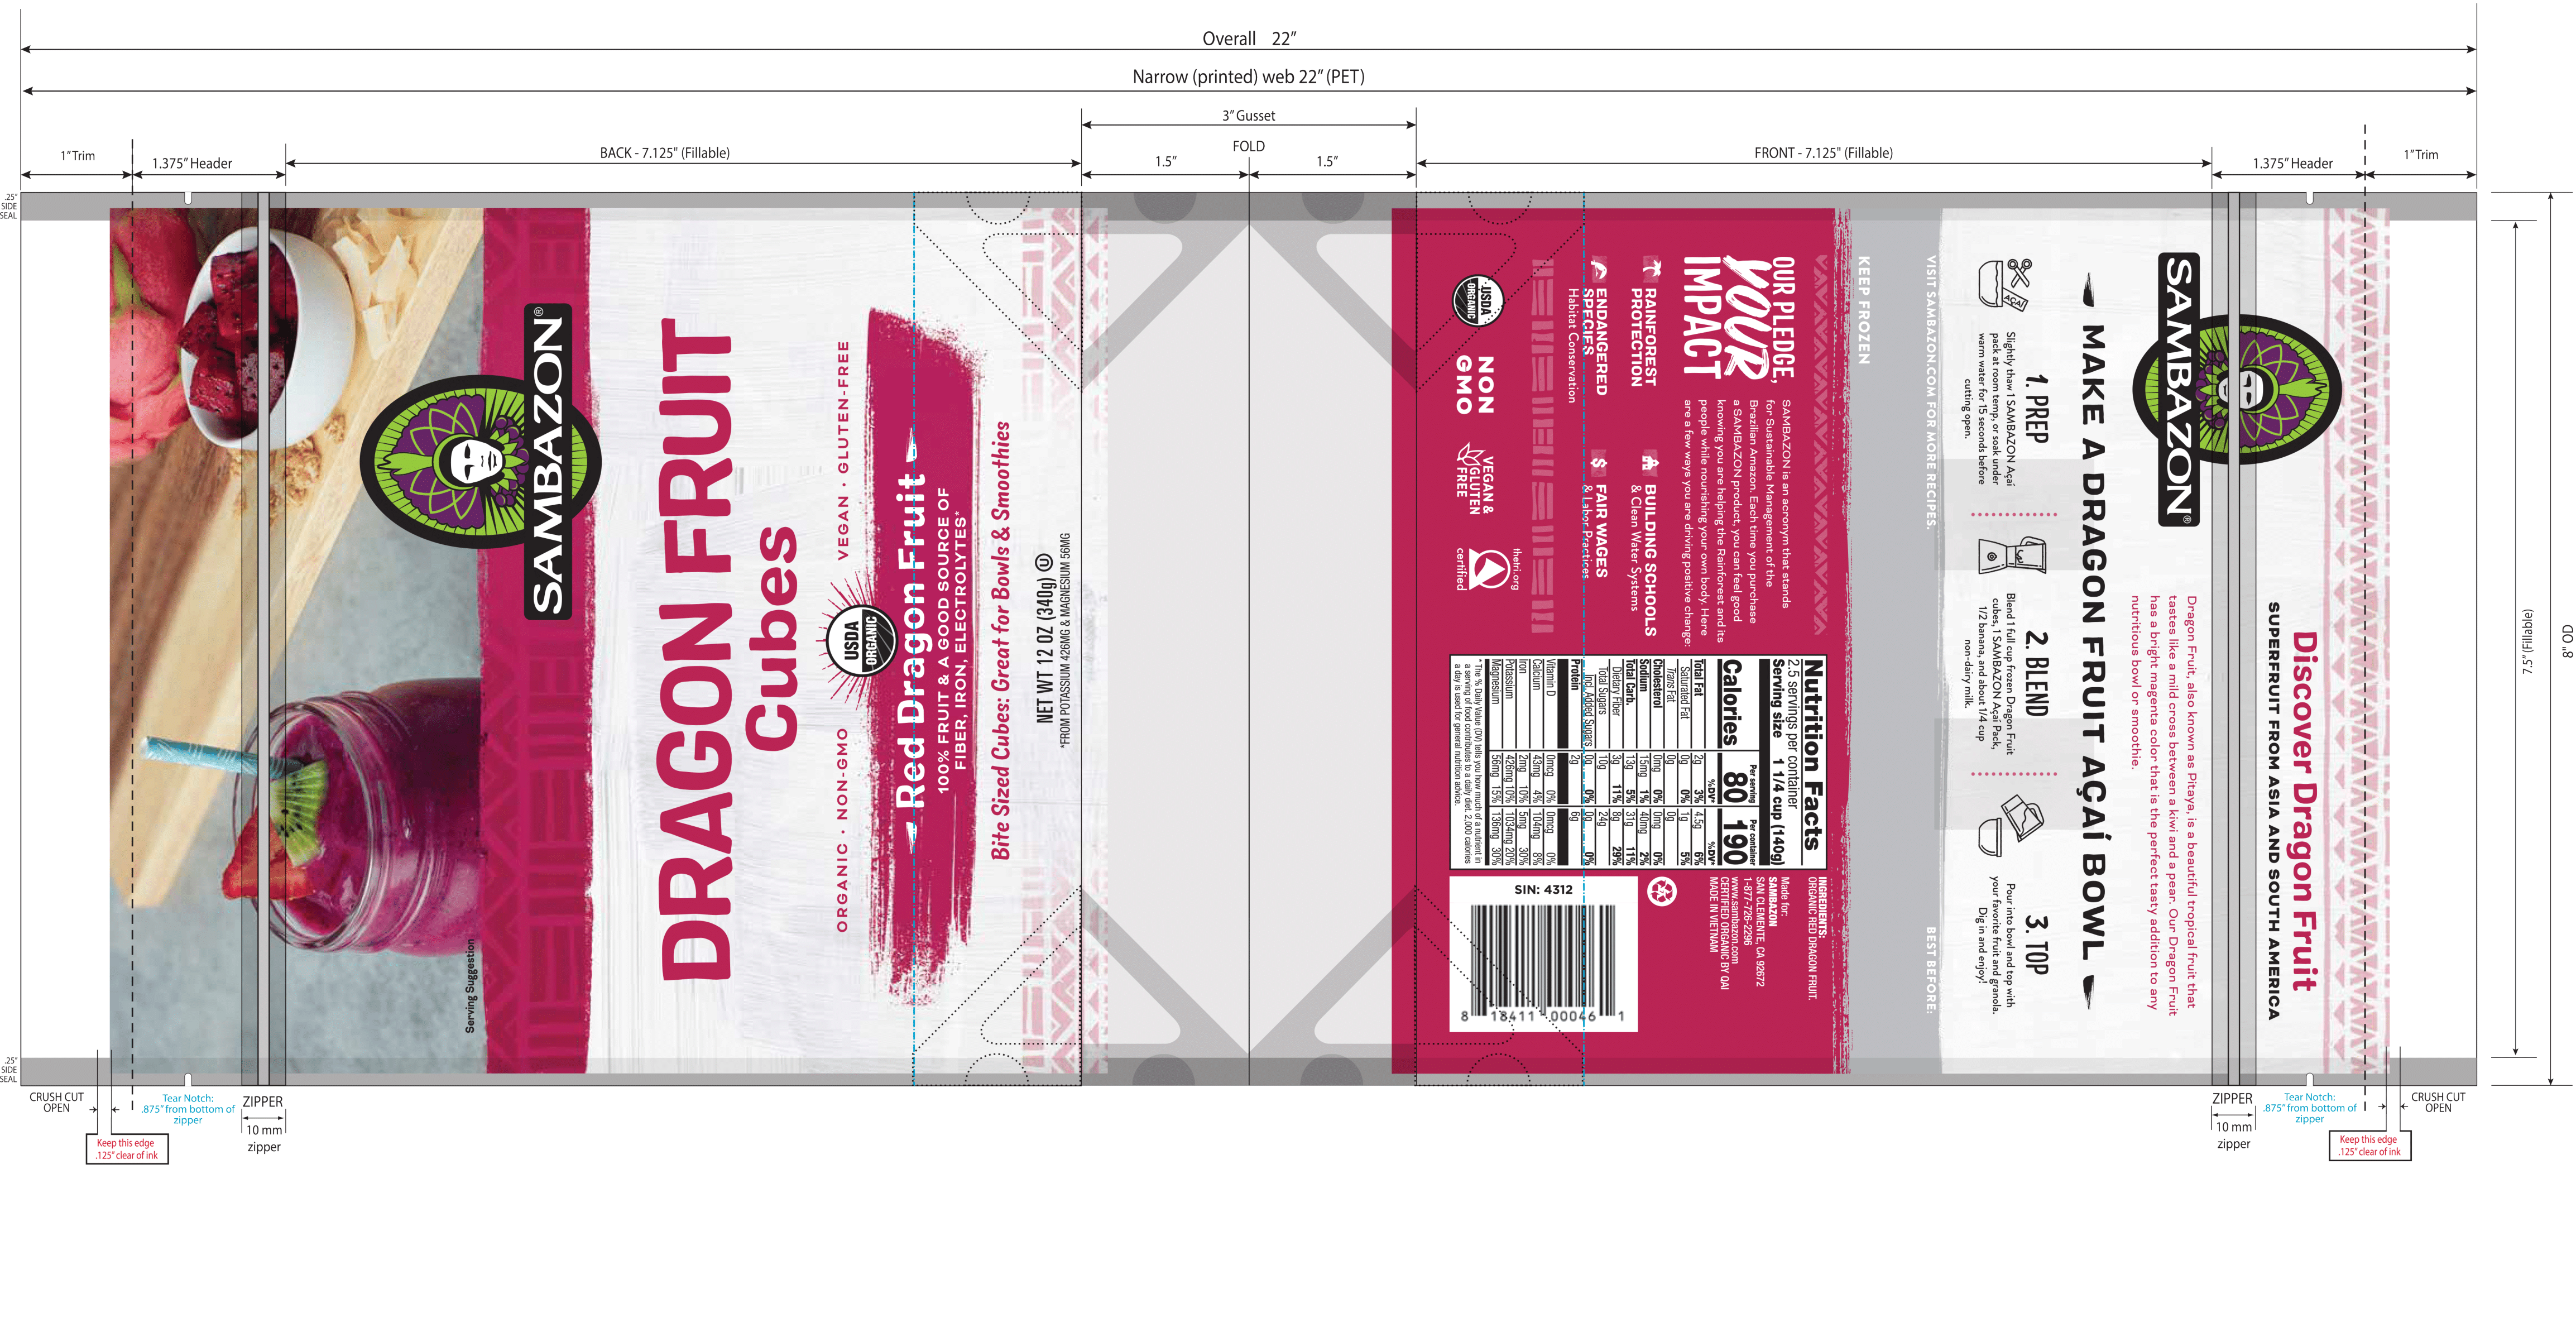 Sambazon Dragon Fruit Cubes 8 units per case 12.0 oz Product Label